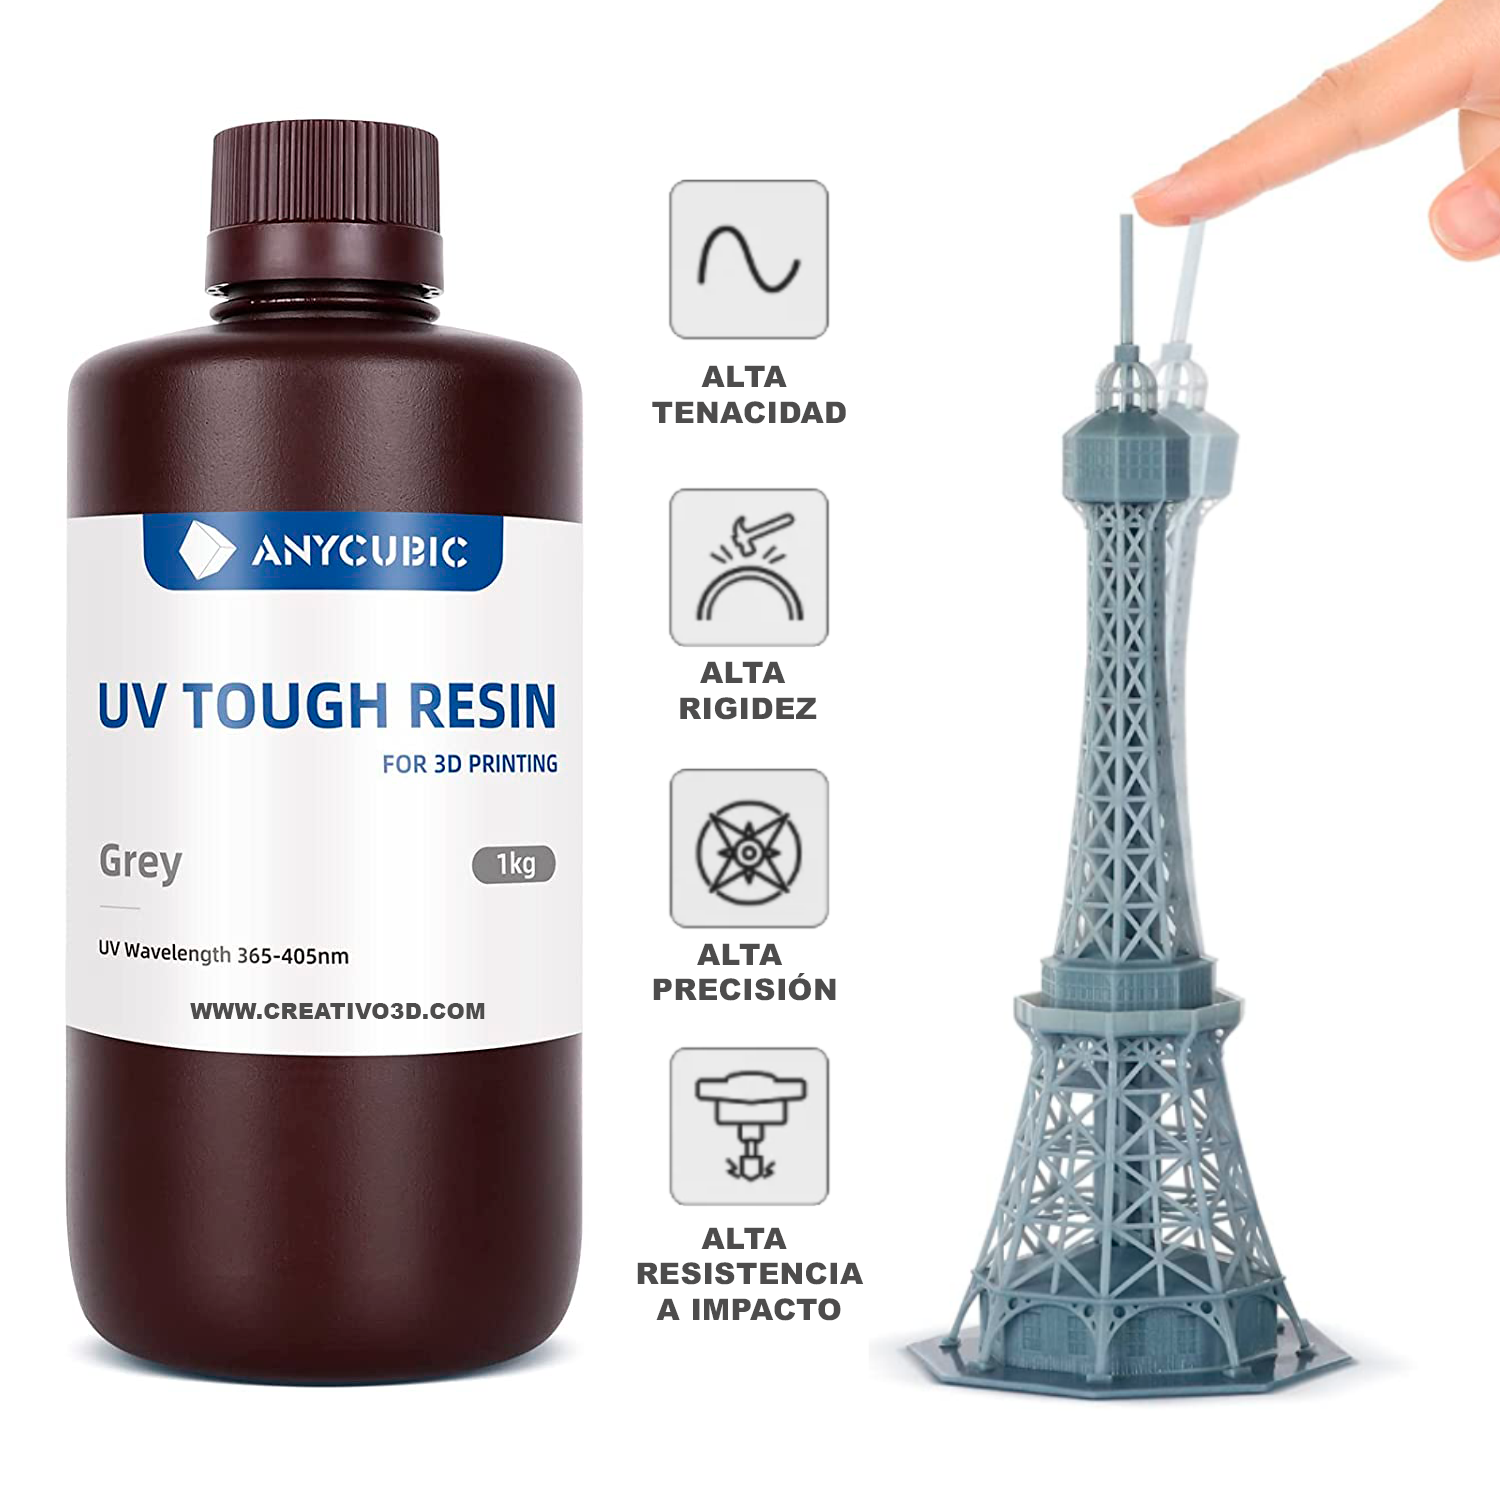 Anycubic - Resina Resistente UV - 1KG - Creativo 3D